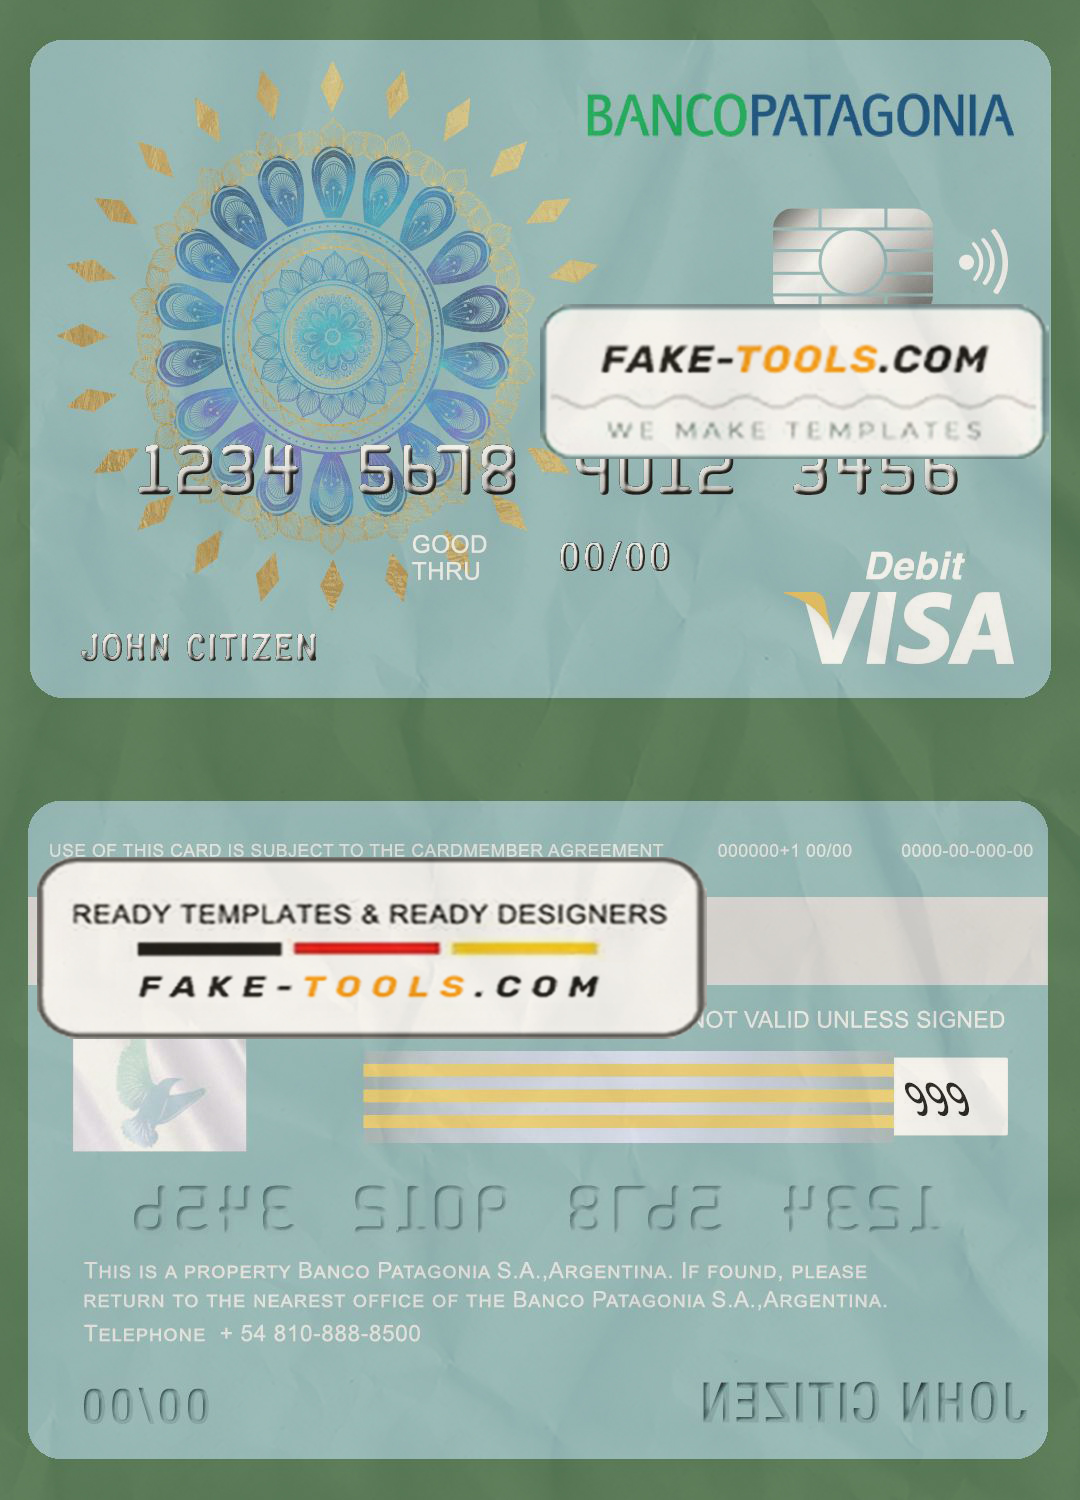 Argentina Banco Patagonia bank visa card debit card template in PSD format, fully editable scan effect